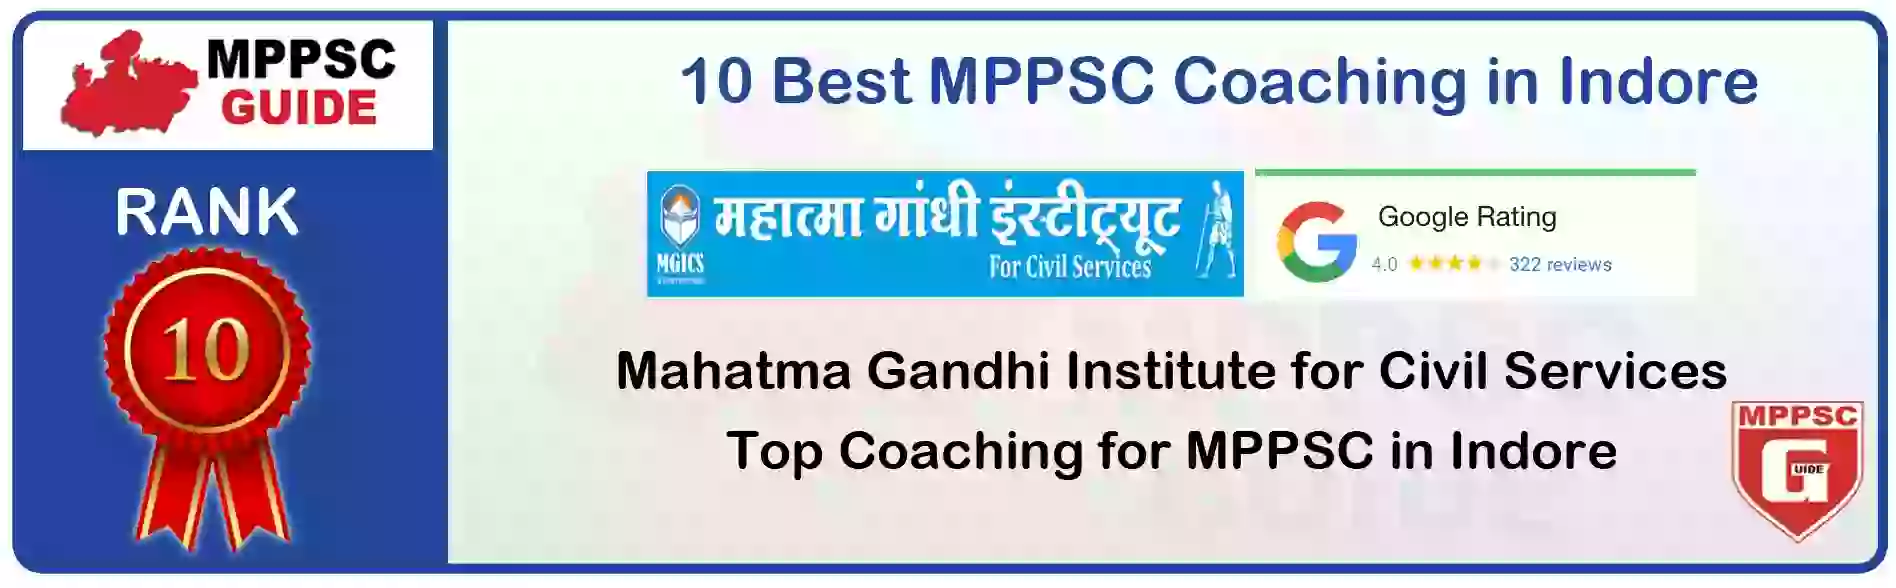 MPPSC Coaching in Indore, MPPSC Coaching Institute In Indore, Best MPPSC Coaching in Indore, Top 10 MPPSC Coaching In Indore, best mppsc coaching institute in indore, MPPSC Coaching Classes In Indore, MPPSC Online Coaching In Indore, mppsc coaching in indore bhanwarkua